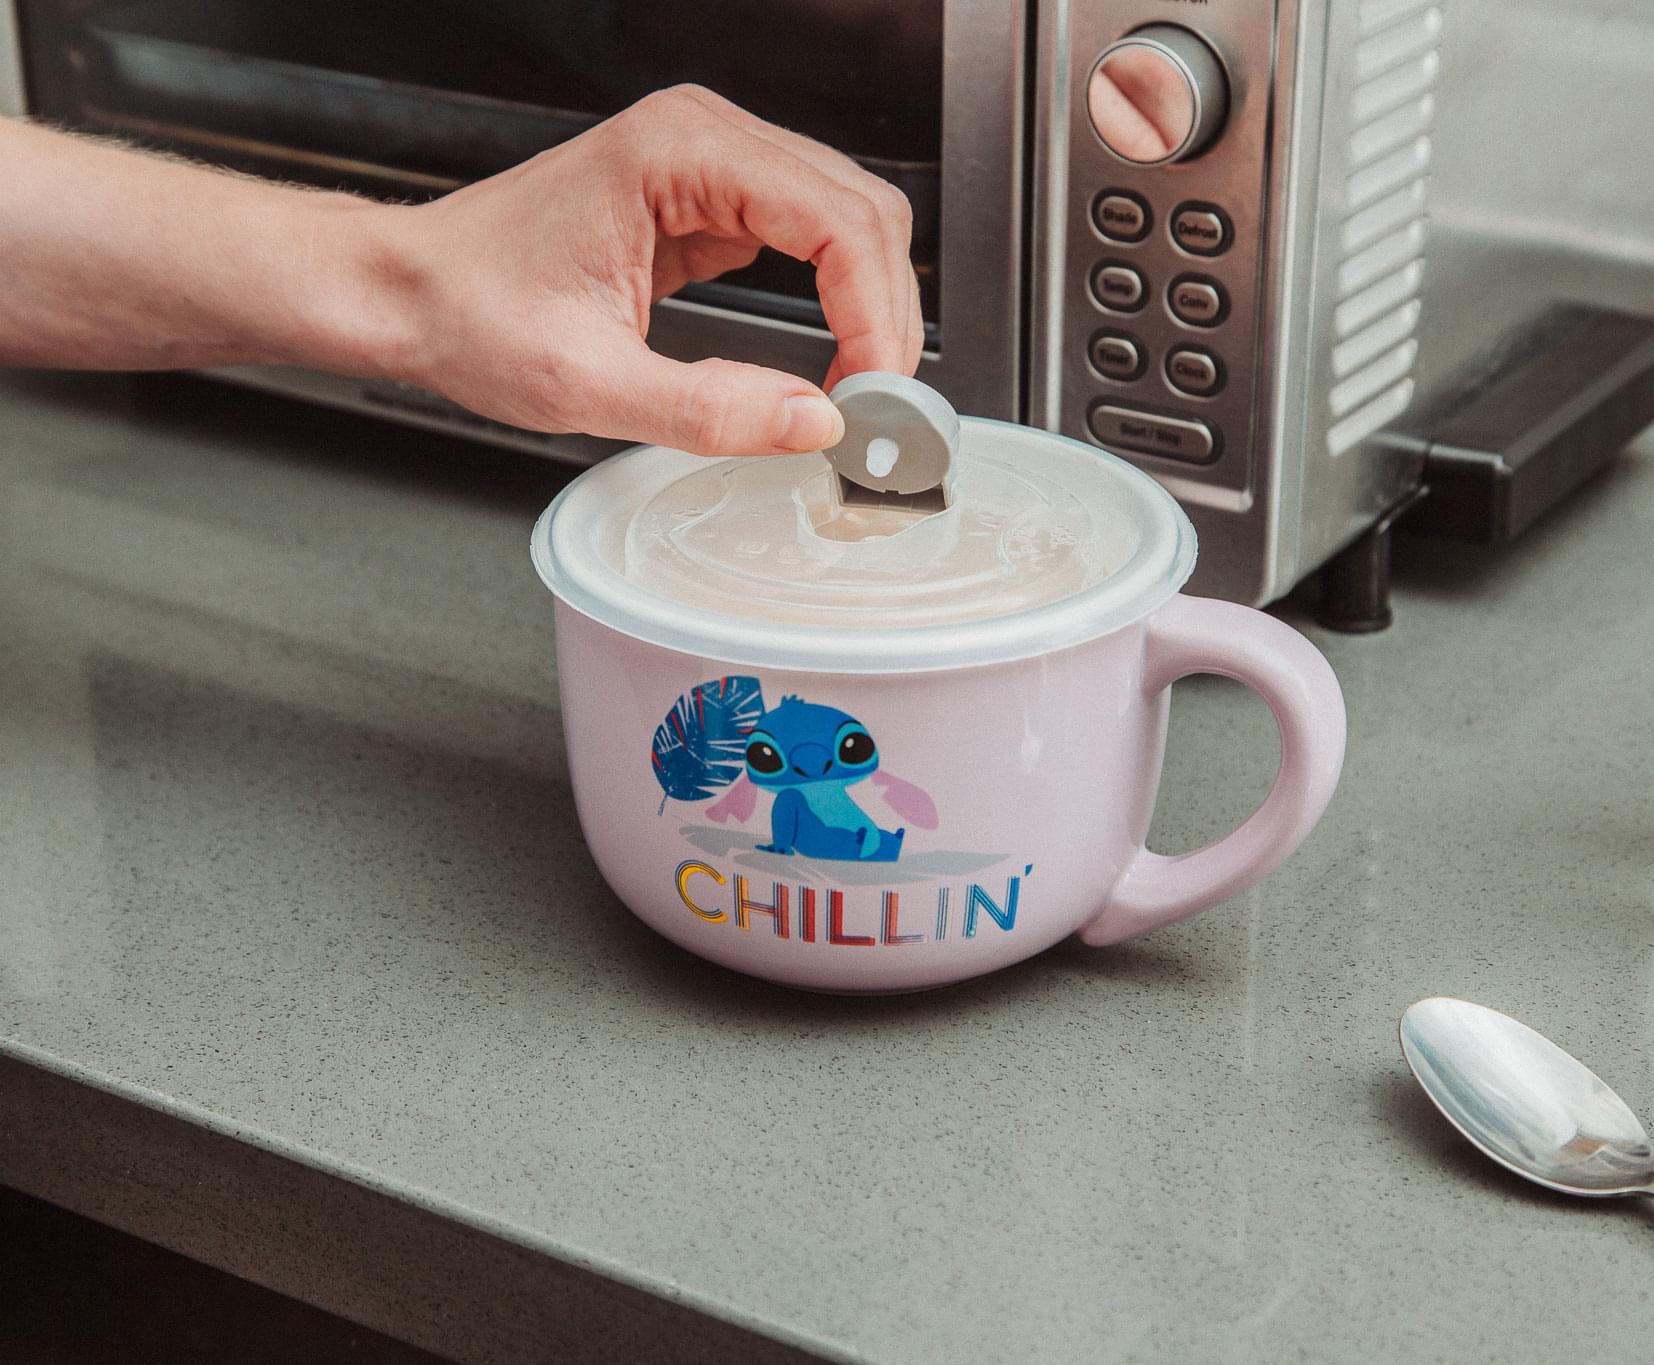 Disney Lilo & Stitch "Chillin" Ceramic Soup Mug With Vented Lid | Holds 24 Ounces